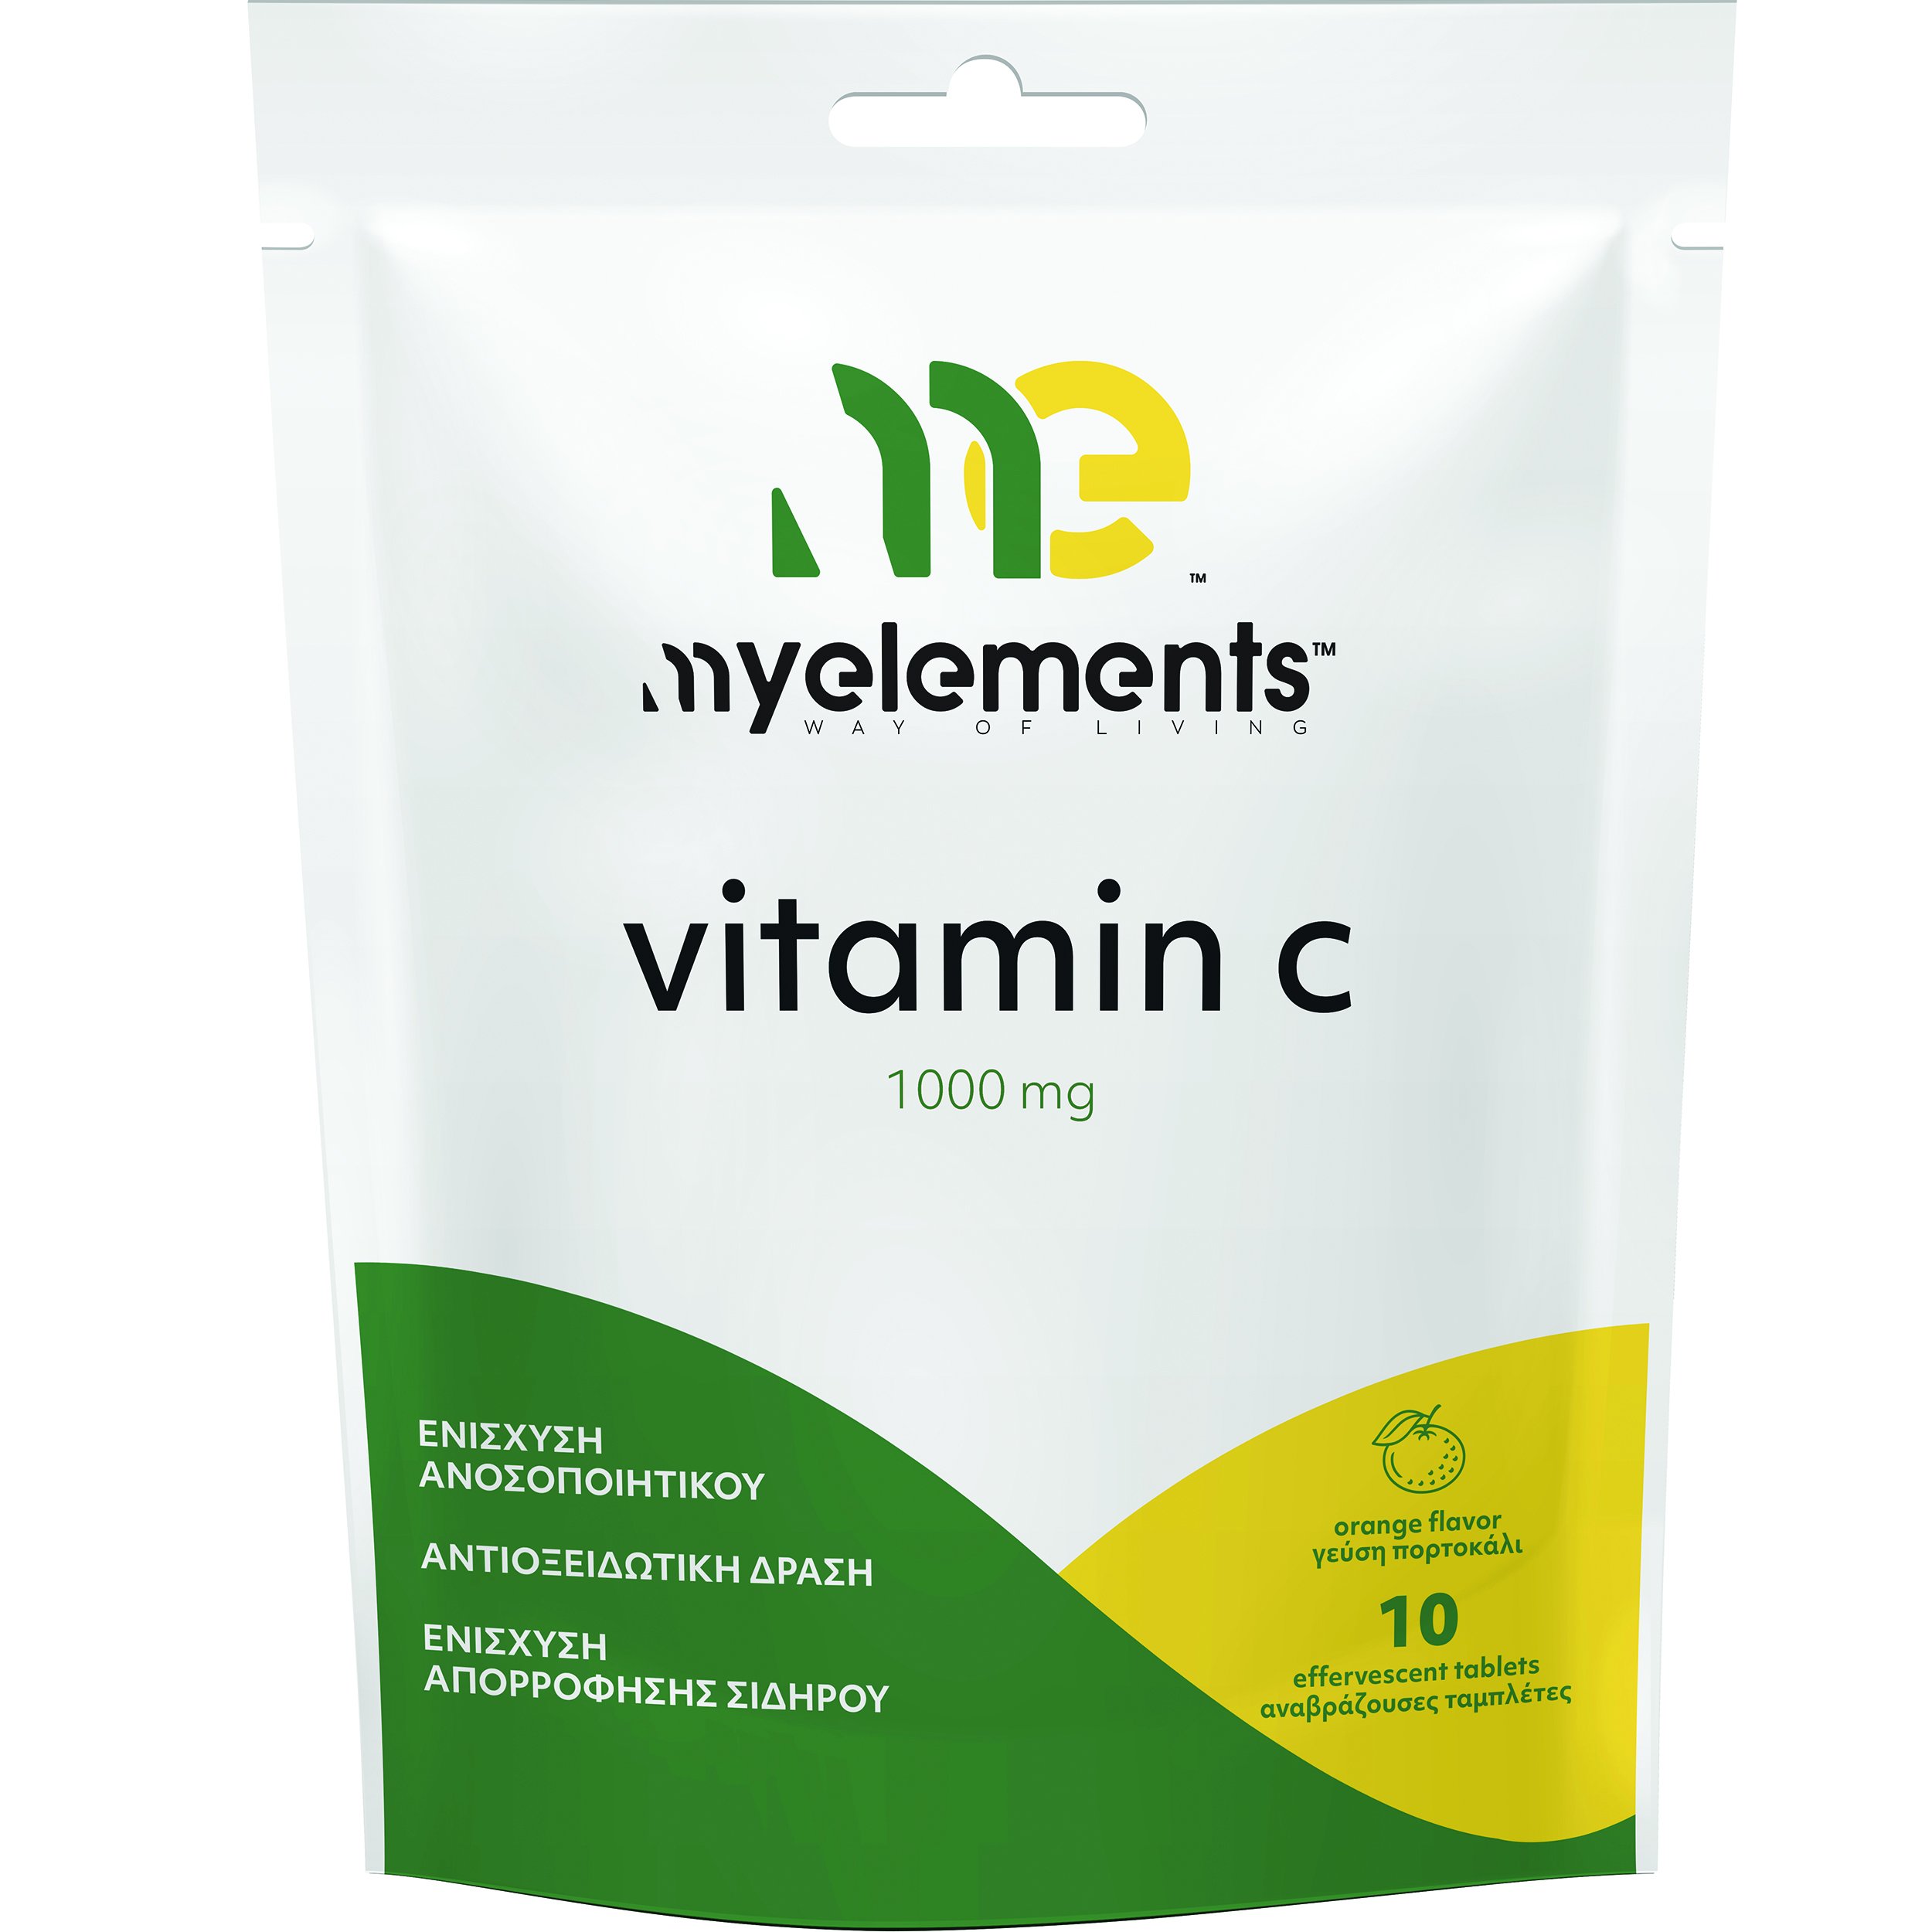 My Elements Vitamin C 1000mg Συμπλήρωμα Διατροφής Βιταμίνης C για Ενίσχυση του Ανοσοποιητικού με Αντιοξειδωτική Δράση με Γεύση Πορτοκάλι 10 Effer.tabs 58067